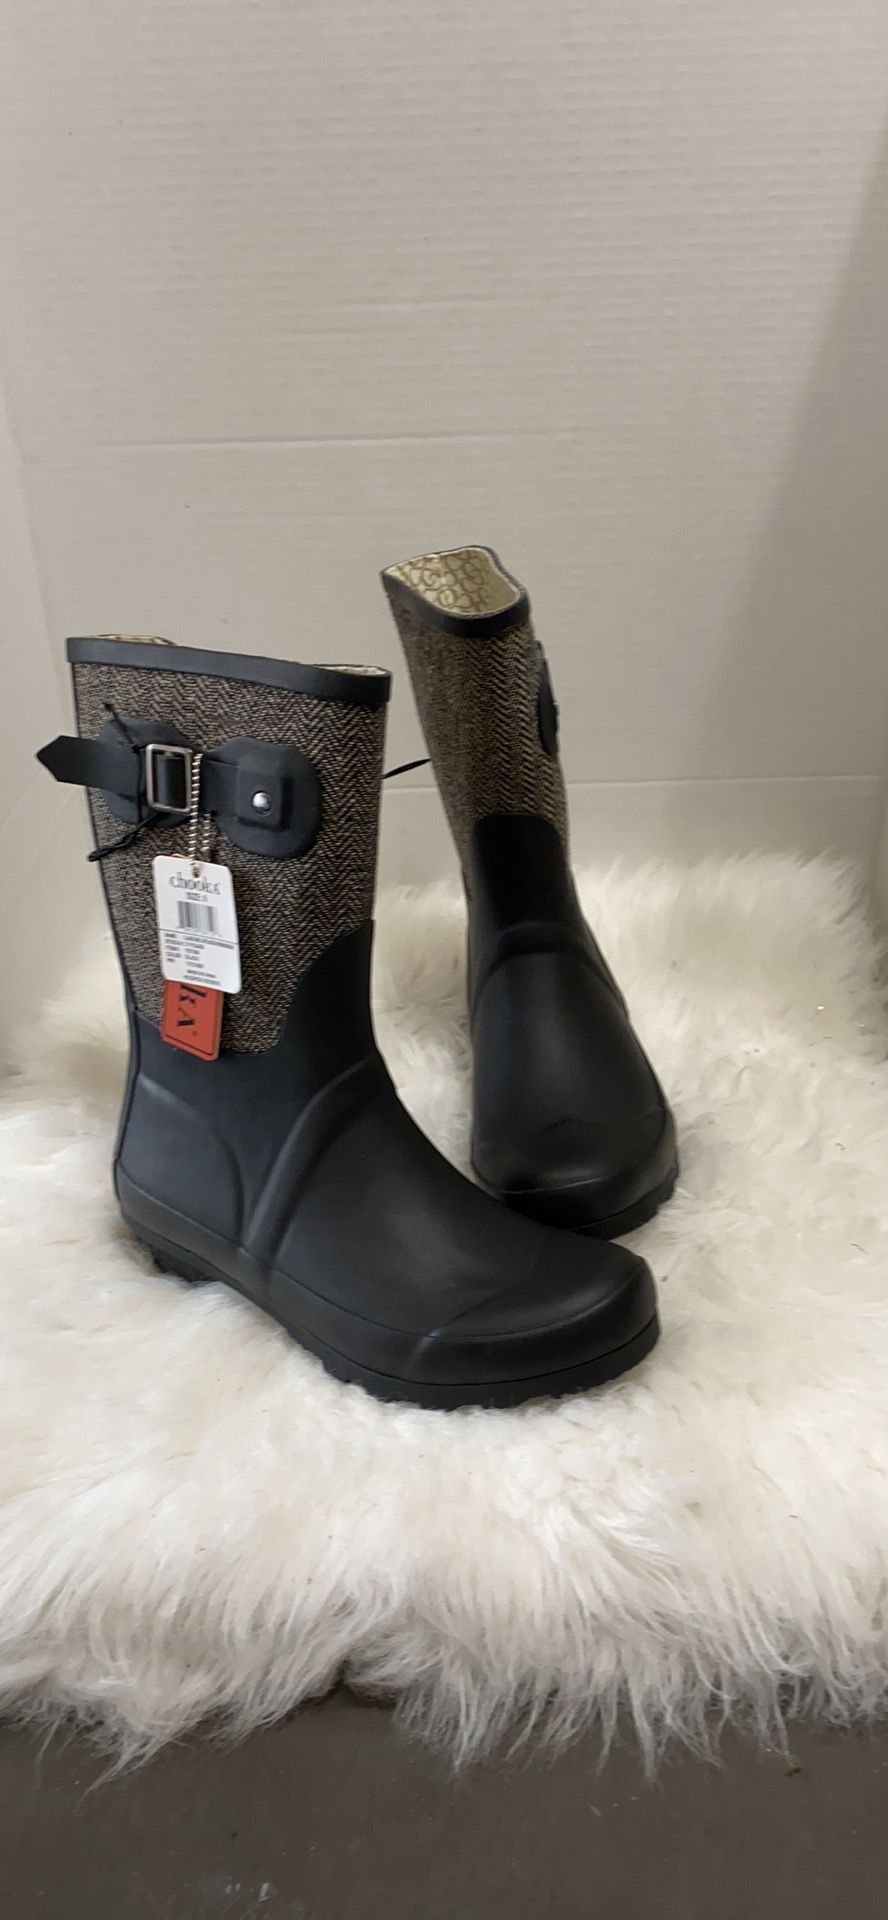 New with tag chooka rain boots size 6-7